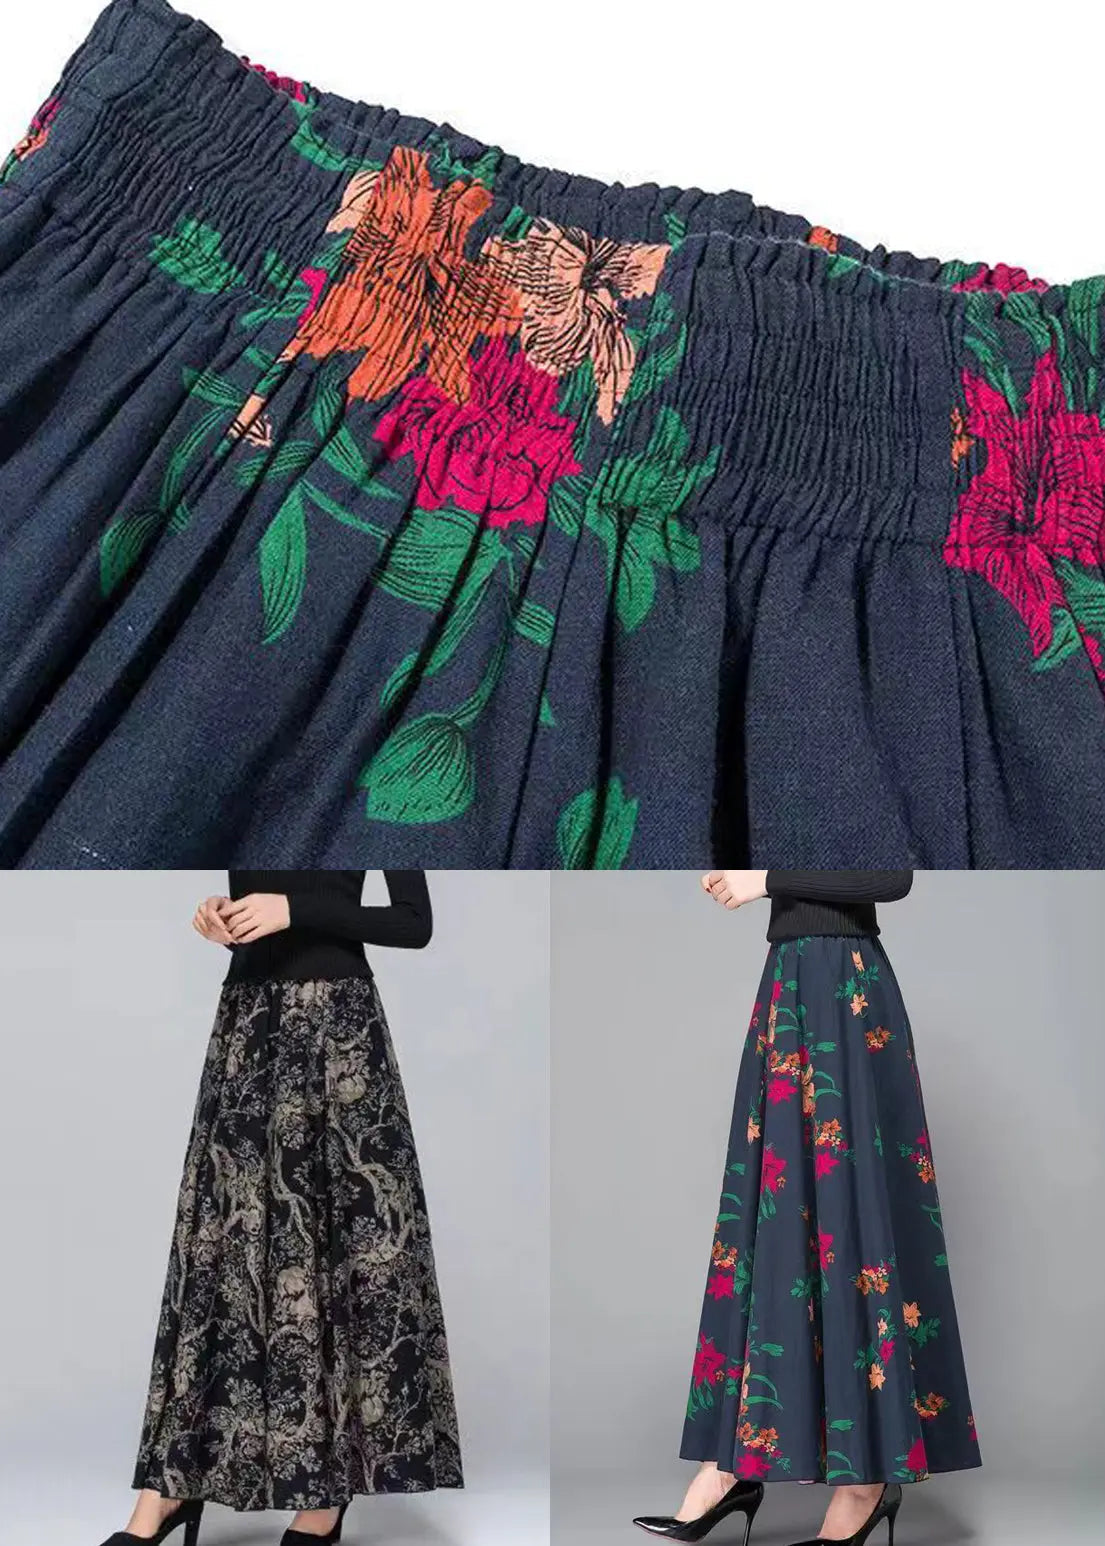 New Navy Print Pockets Patchwork Cotton Skirts Fall Ada Fashion